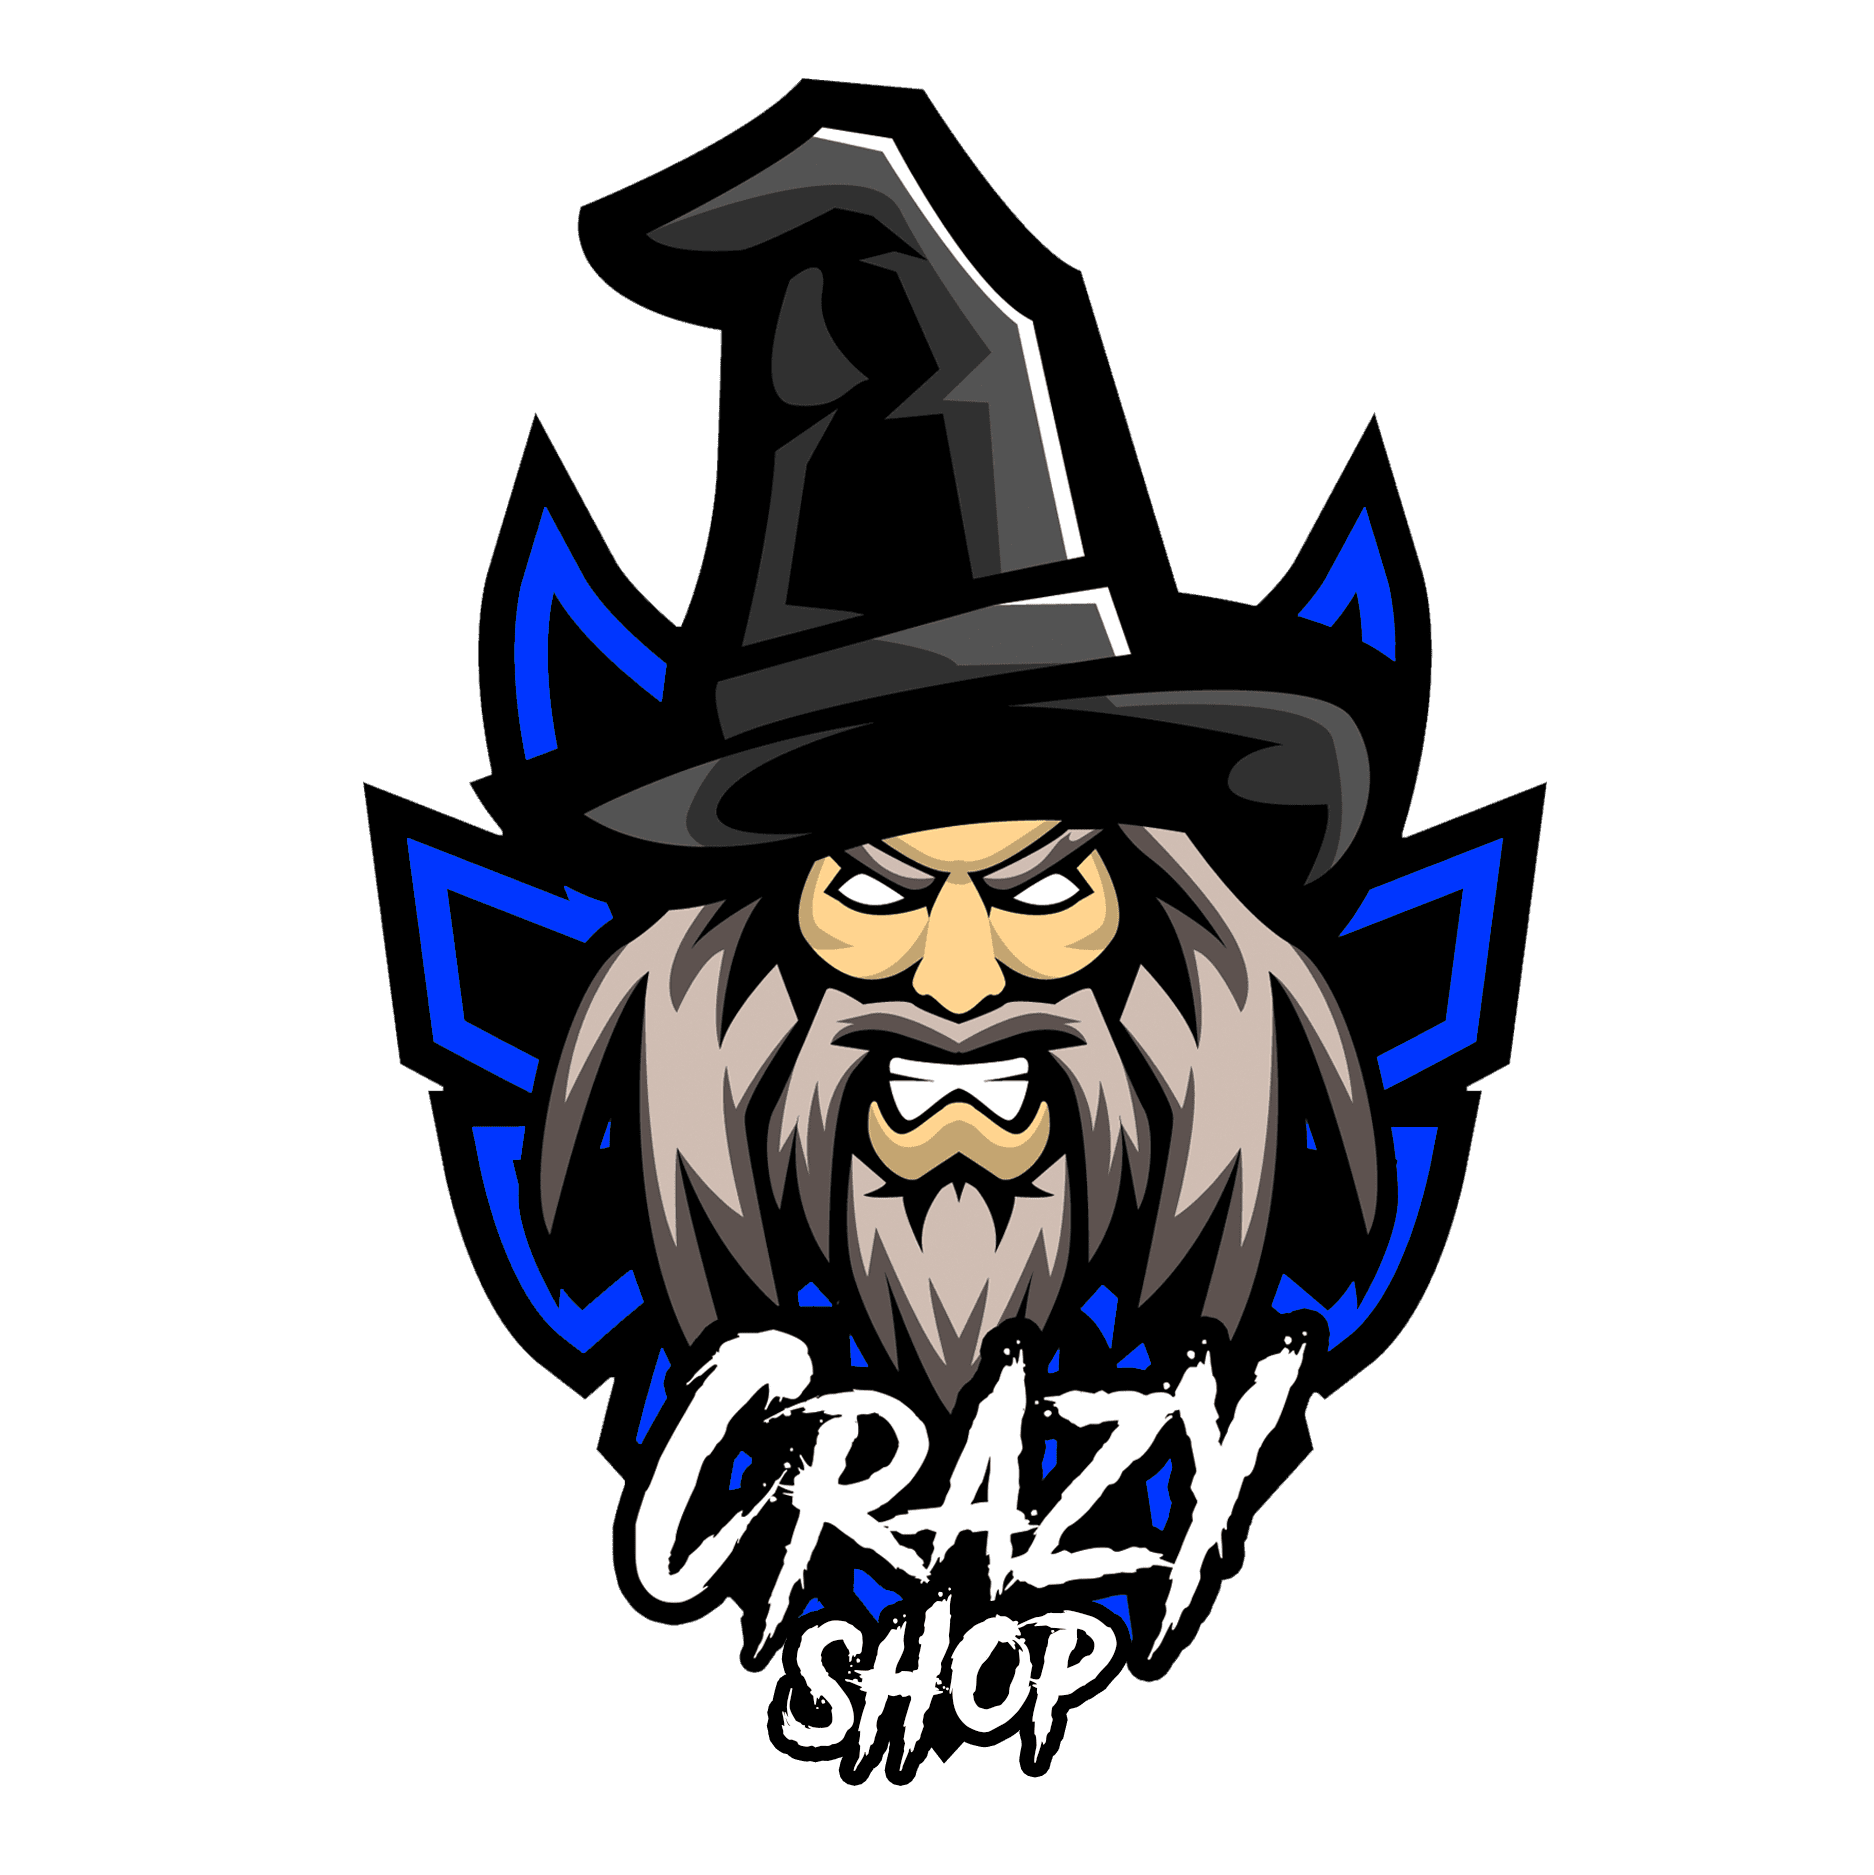 Shop - Crazy